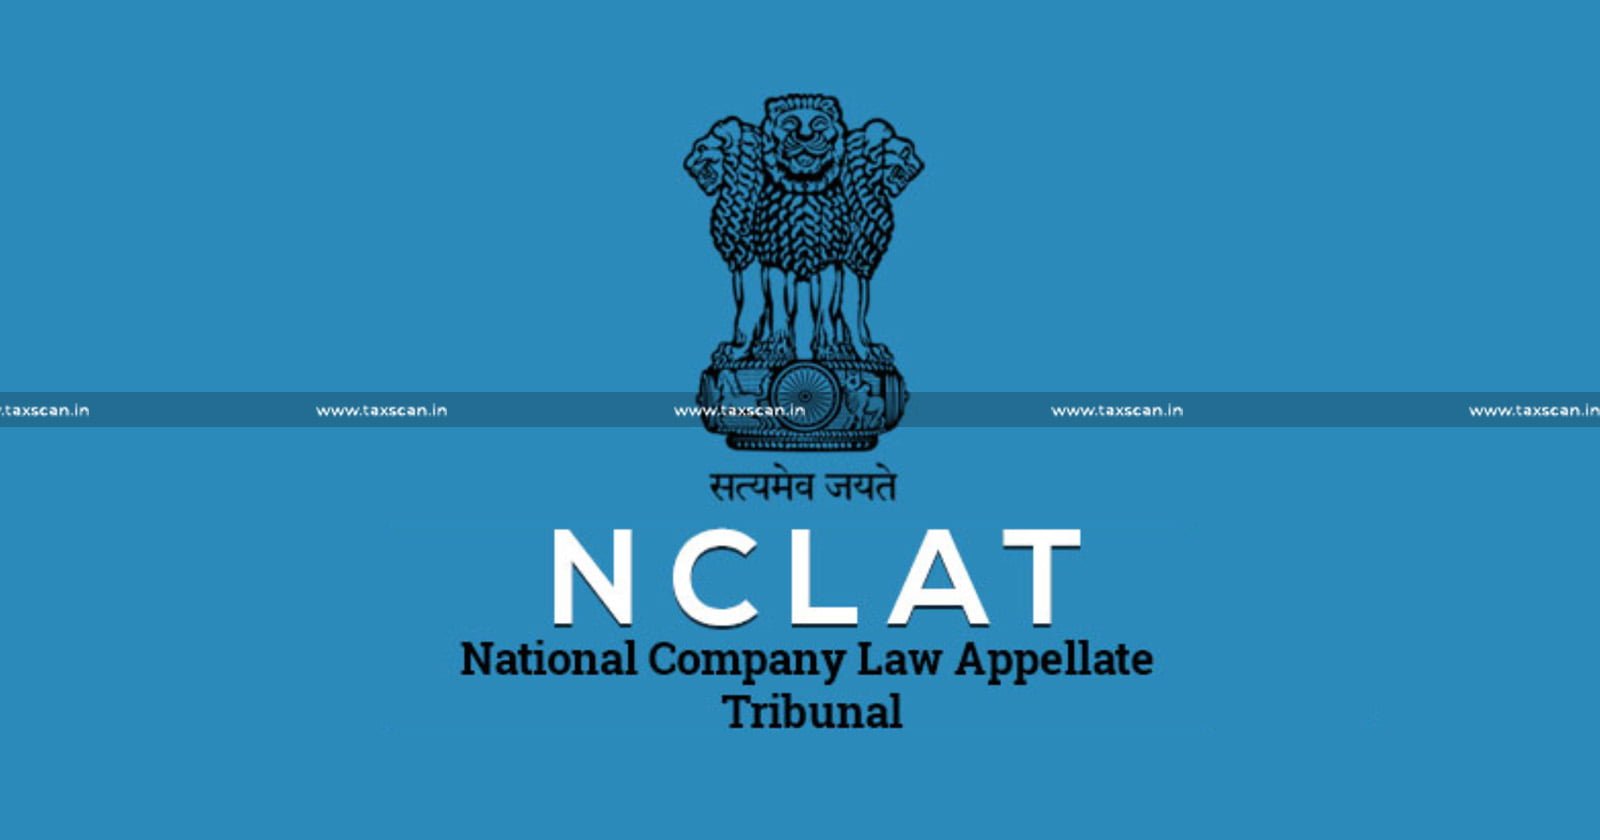 NCLAT - National Company Law Appellate Tribunal - Financial Debt Claim - Memorandum of Understanding - MoU - Taxscan